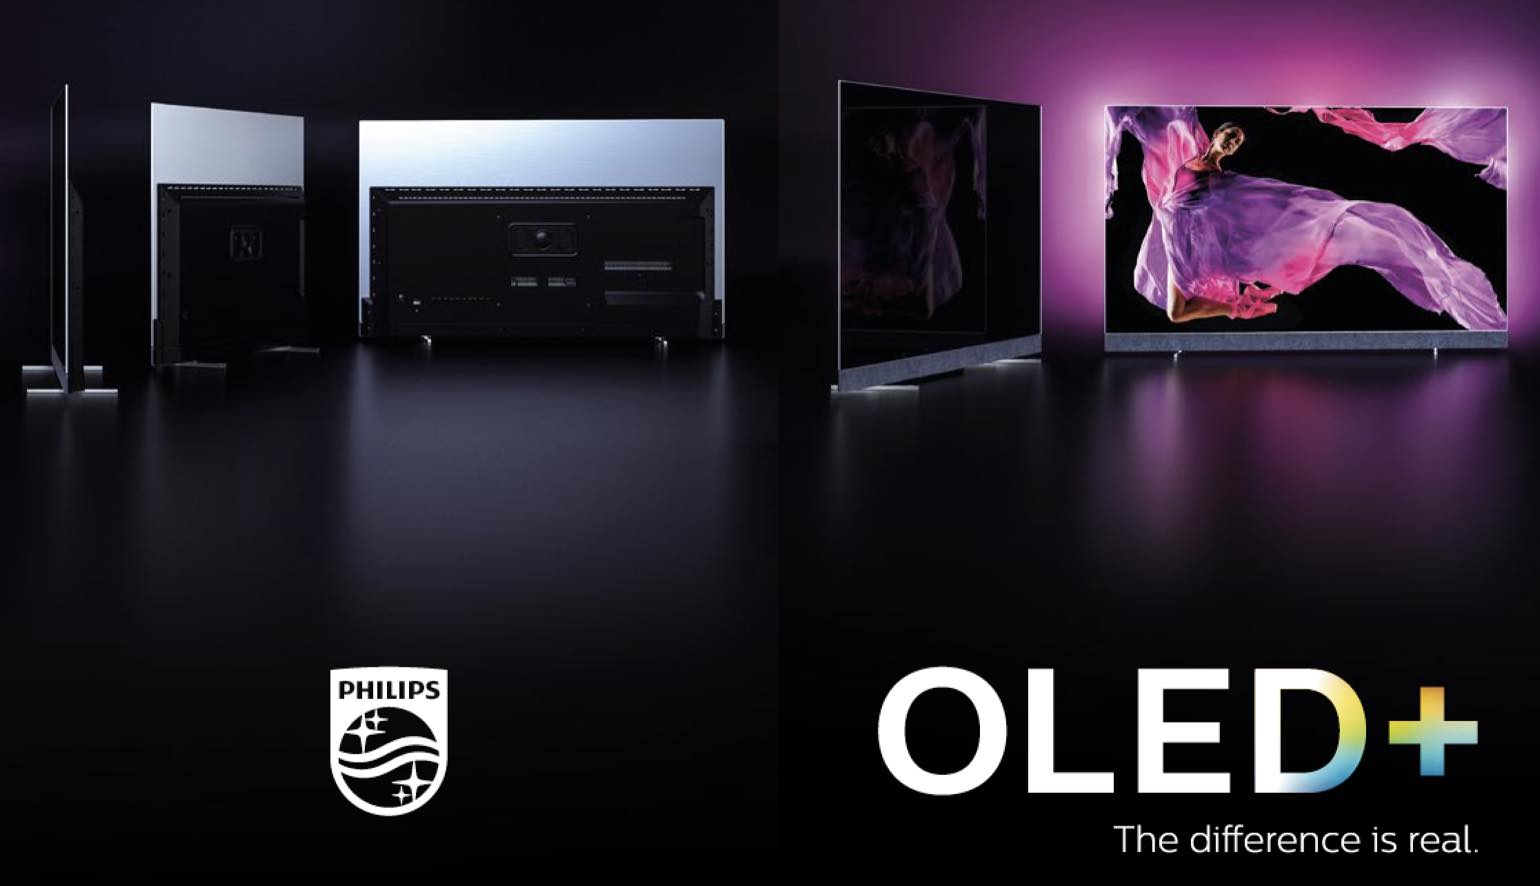 Philips introduce OLED+